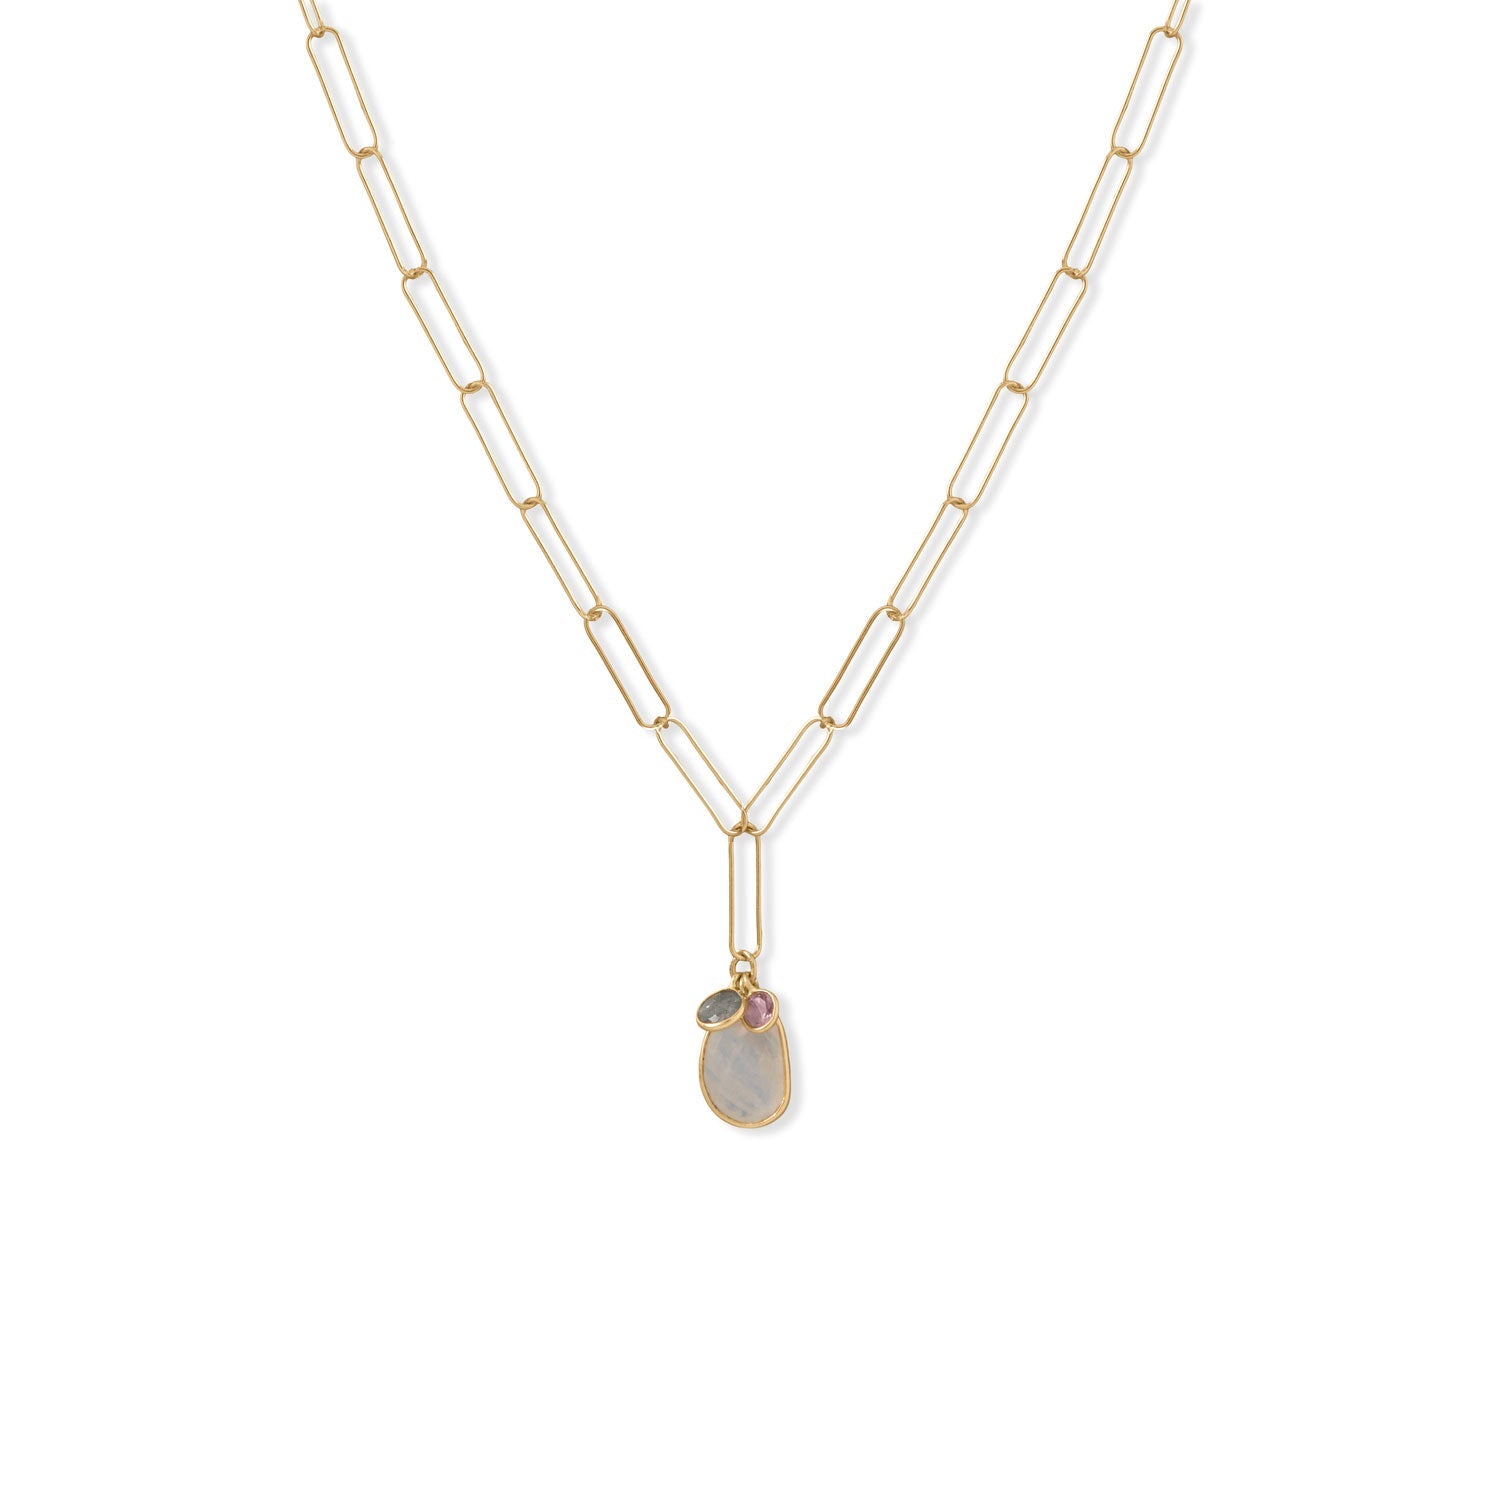 20" 14 Karat Gold Plated Charm Drop Necklace